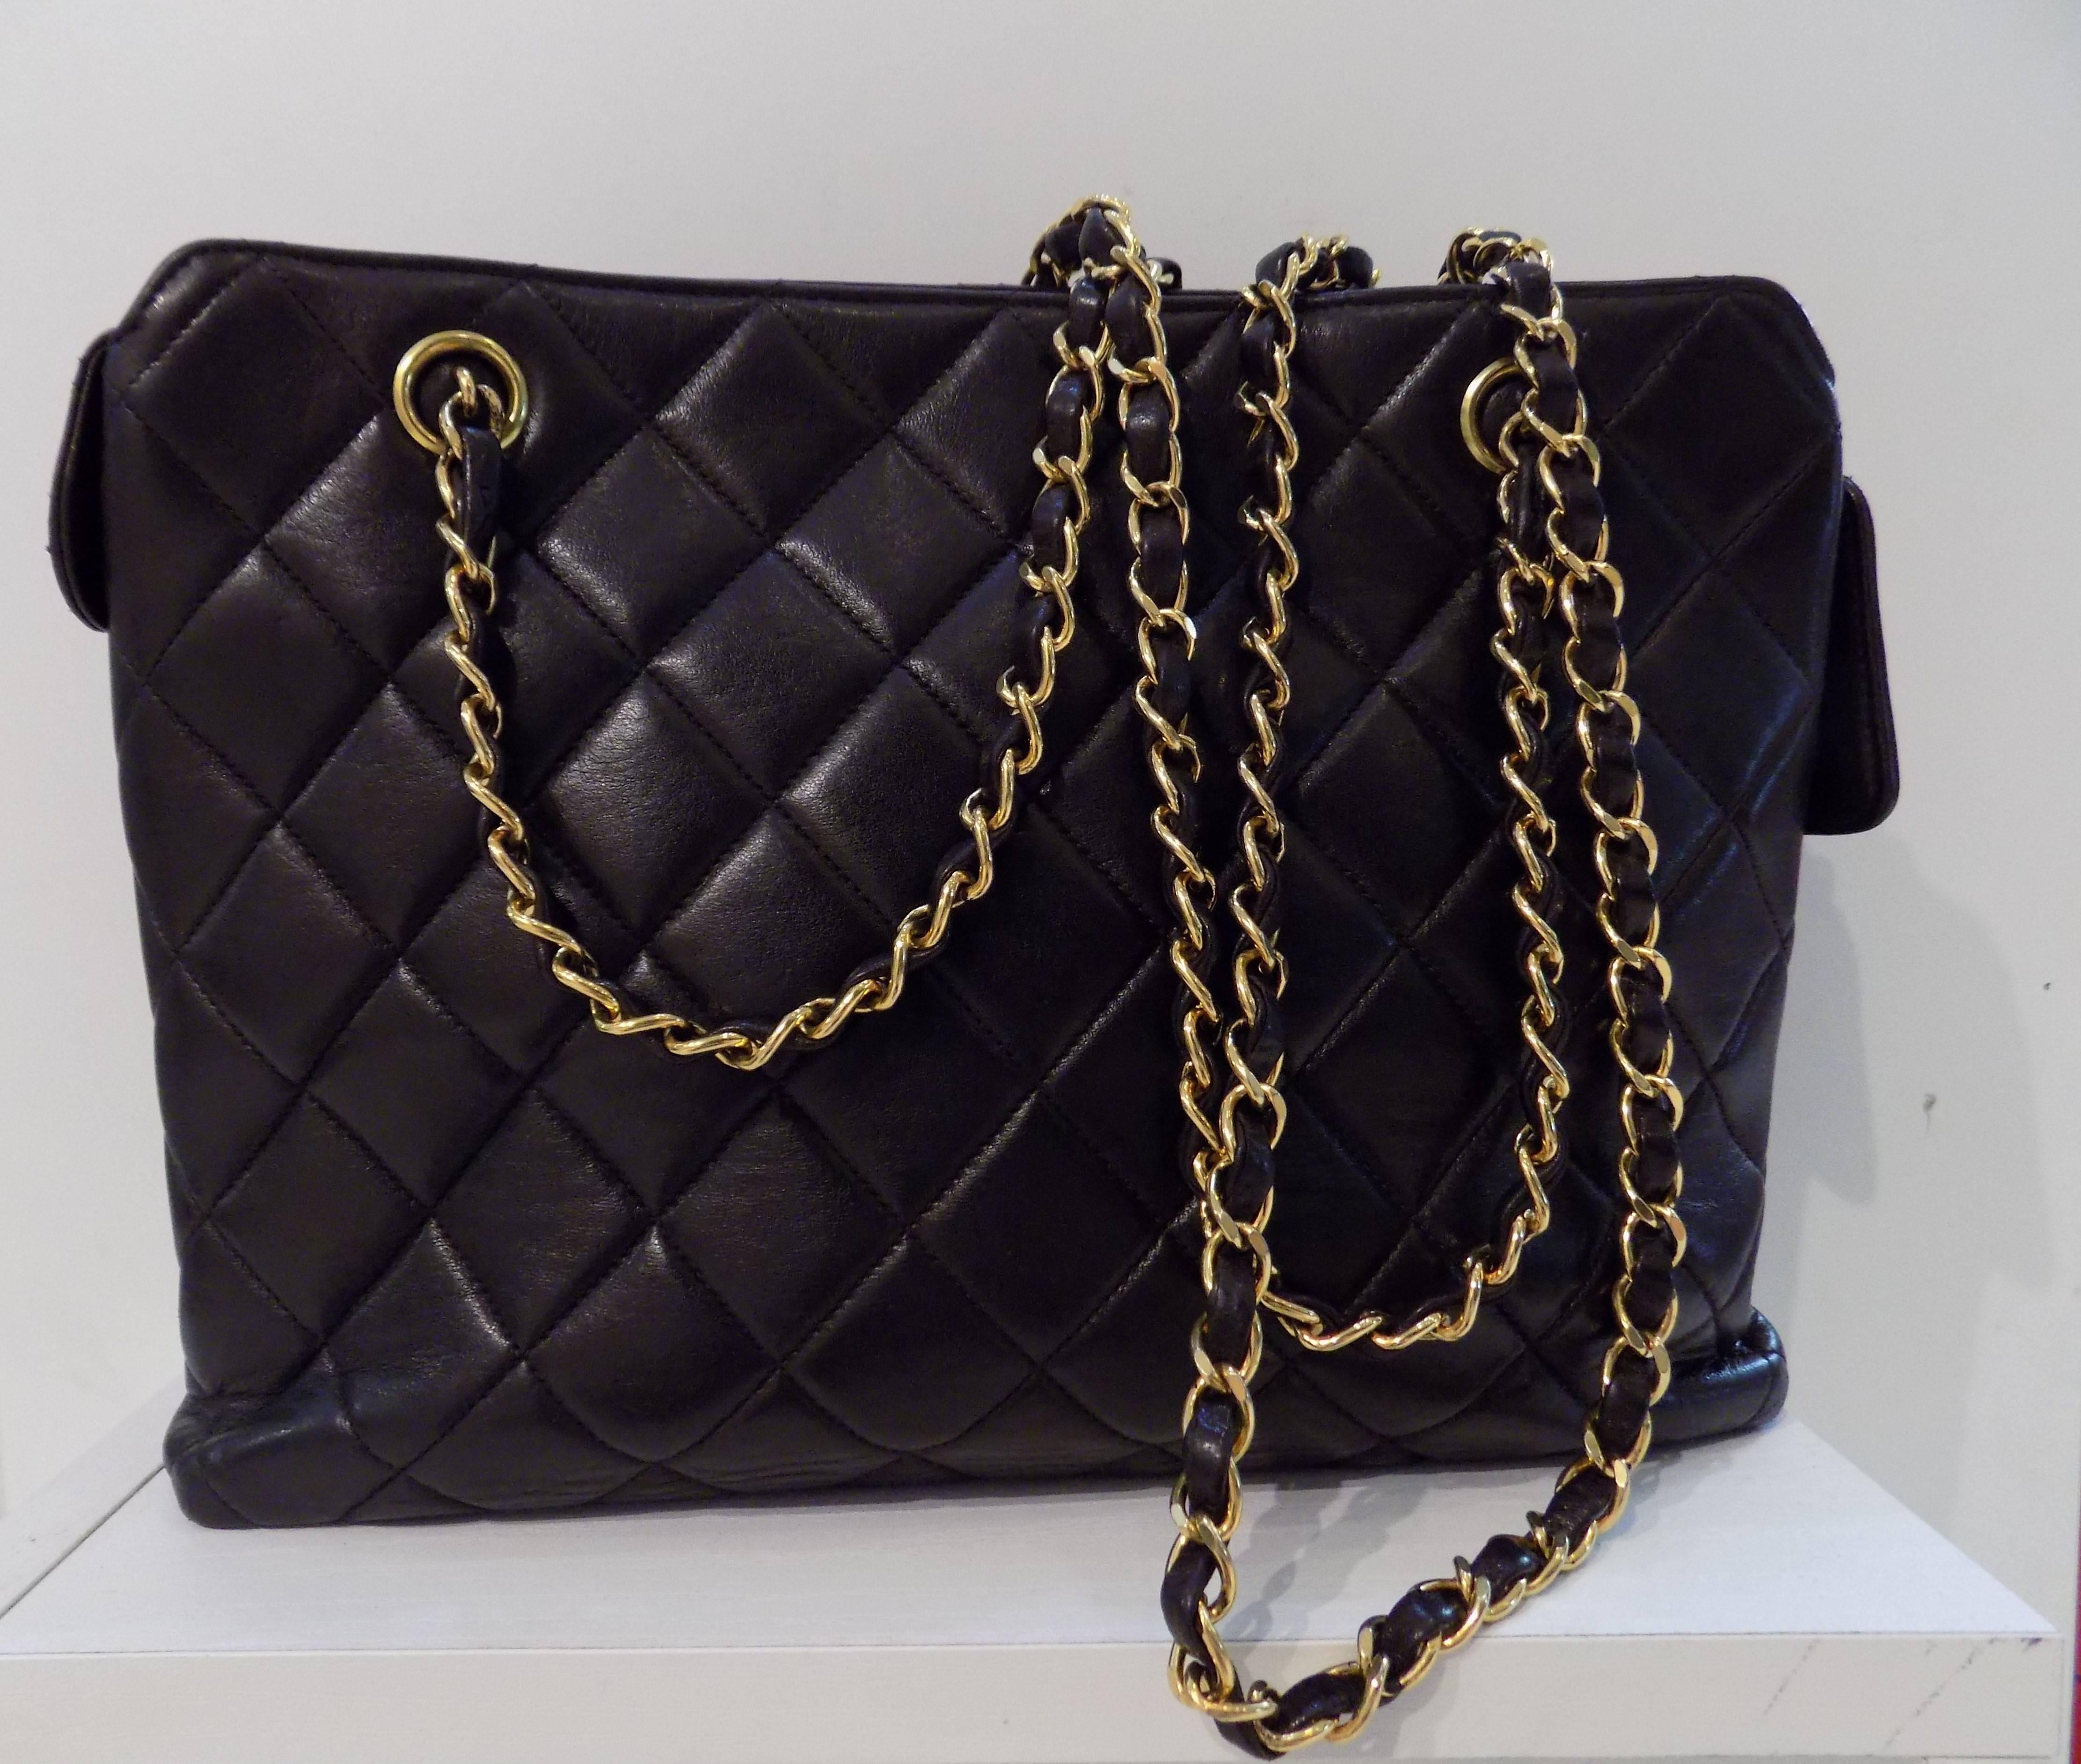 80ies Chanel Black Lambskin Leather Bag
Gold tone hardware 
